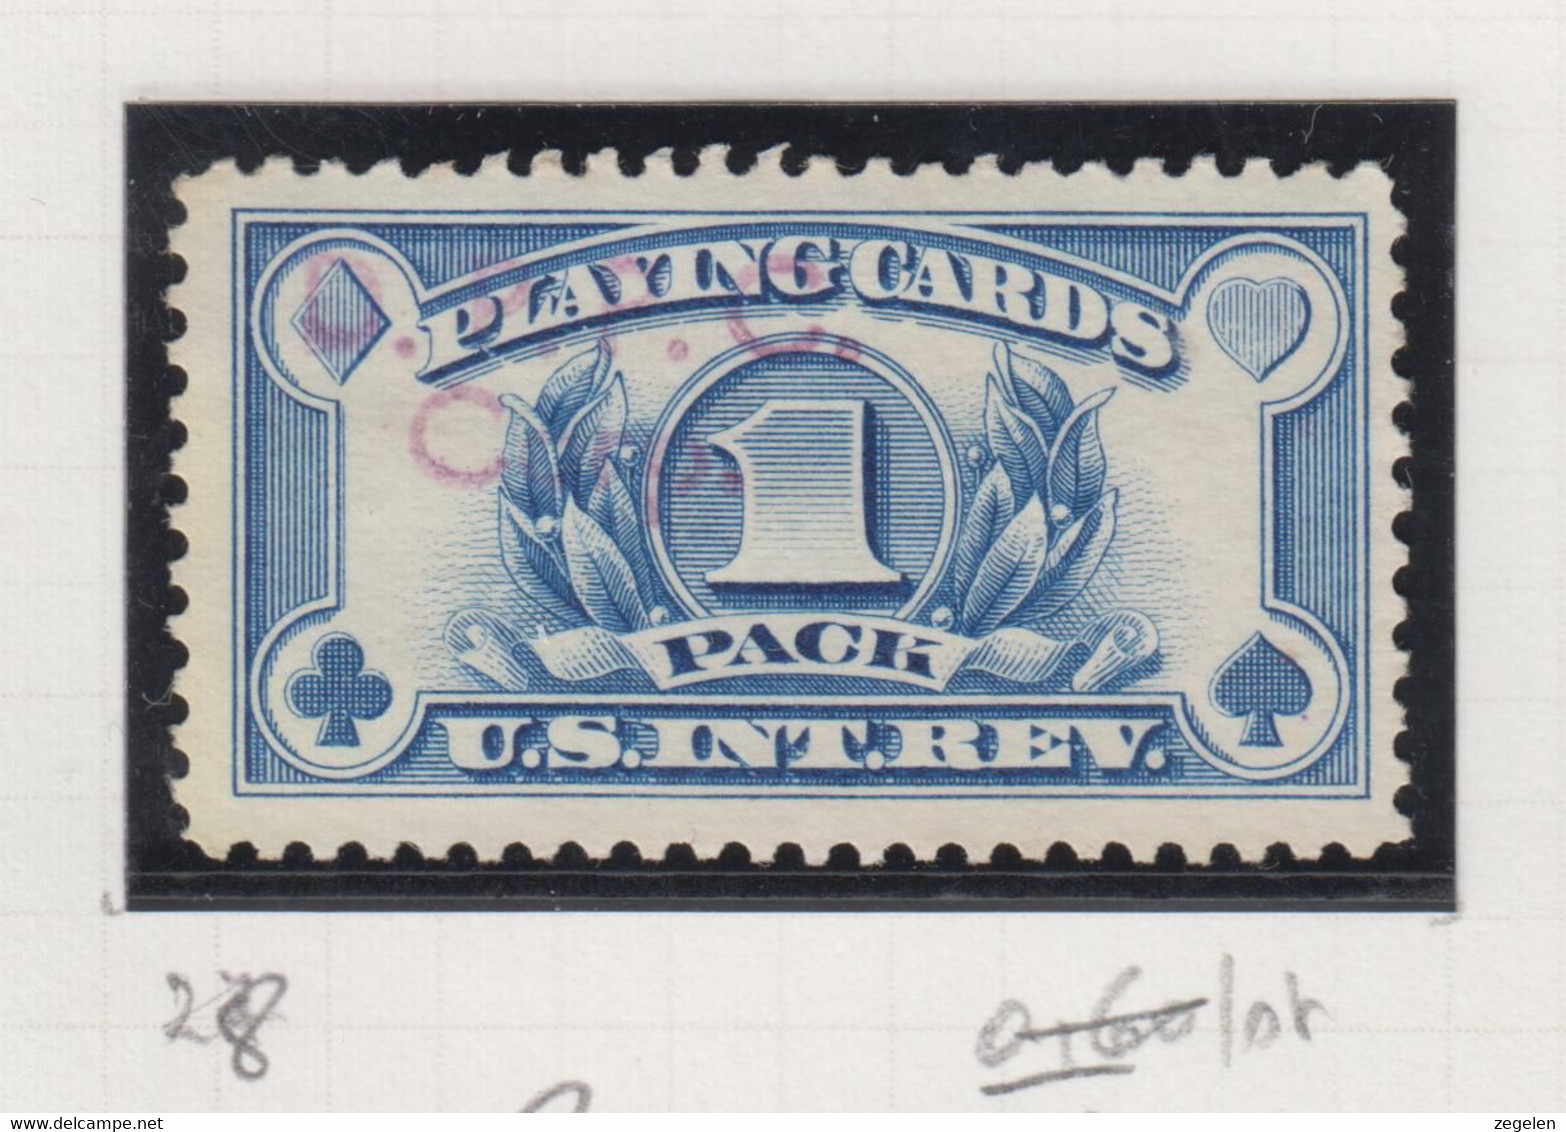 Verenigde Staten Scott Cataloog Revenue Stamps Playing Cards RE28 Met Preo-stempel - Revenues